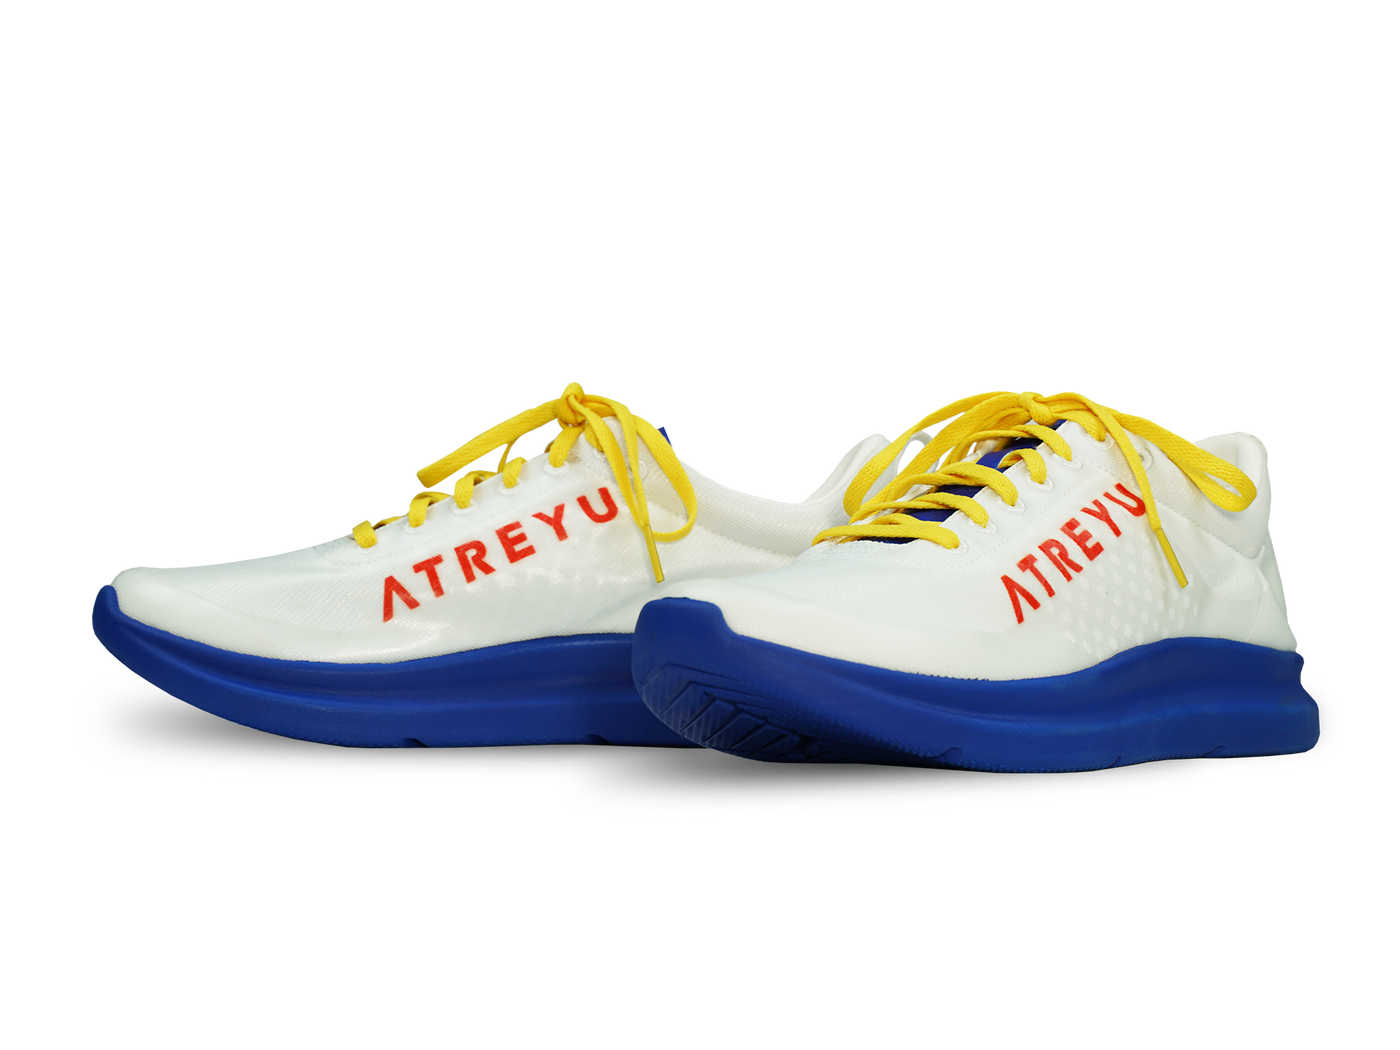 Atreyu Base Model - Lightweight running shoes pair team